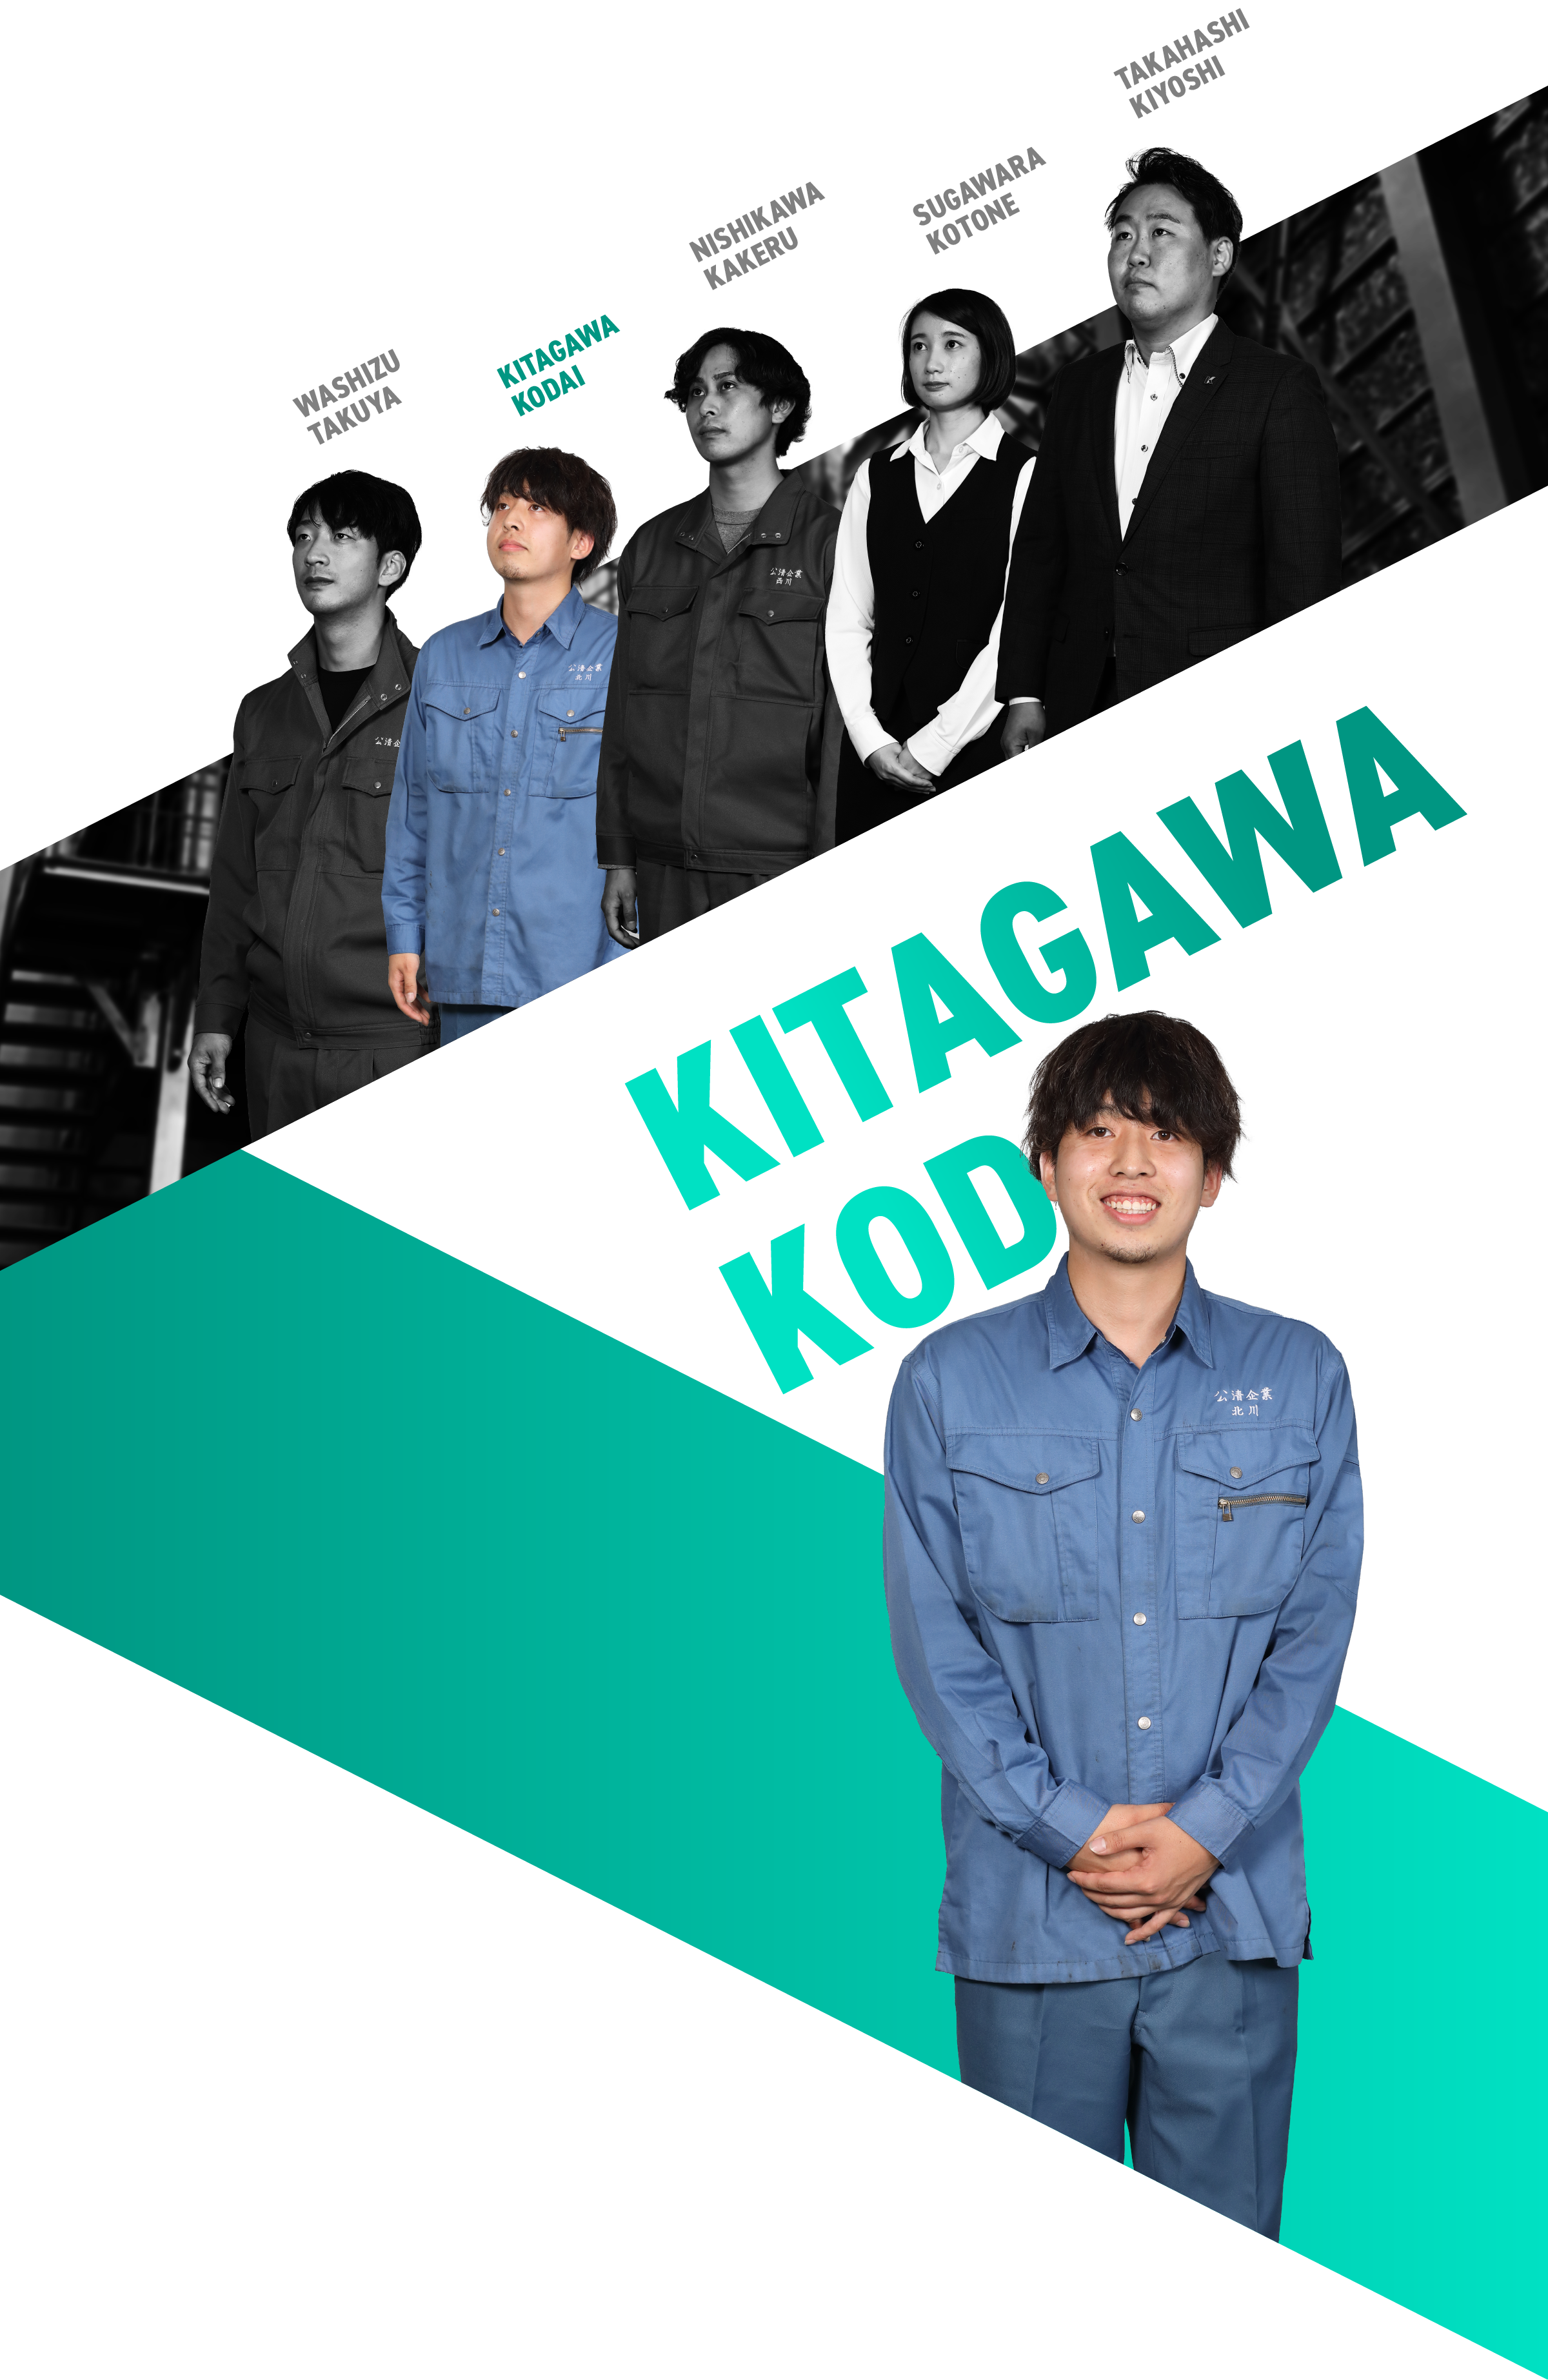 Kitagawa Kodai